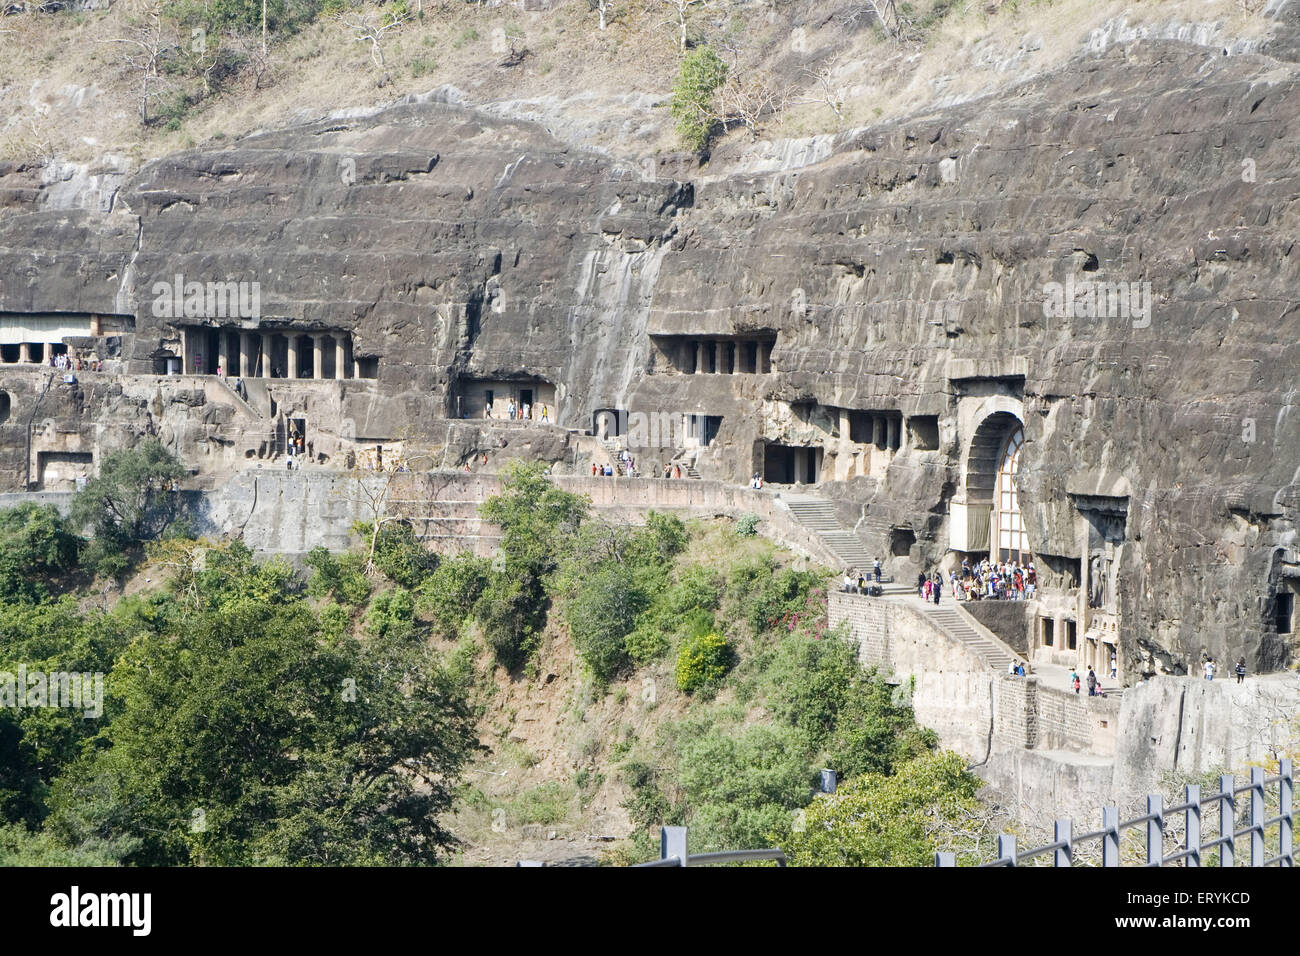 Ajanta Höhlen Gesteinsschnitt Buddhistische Höhlendenkmäler in Aurangabad bei Maharashtra Indien Stockfoto